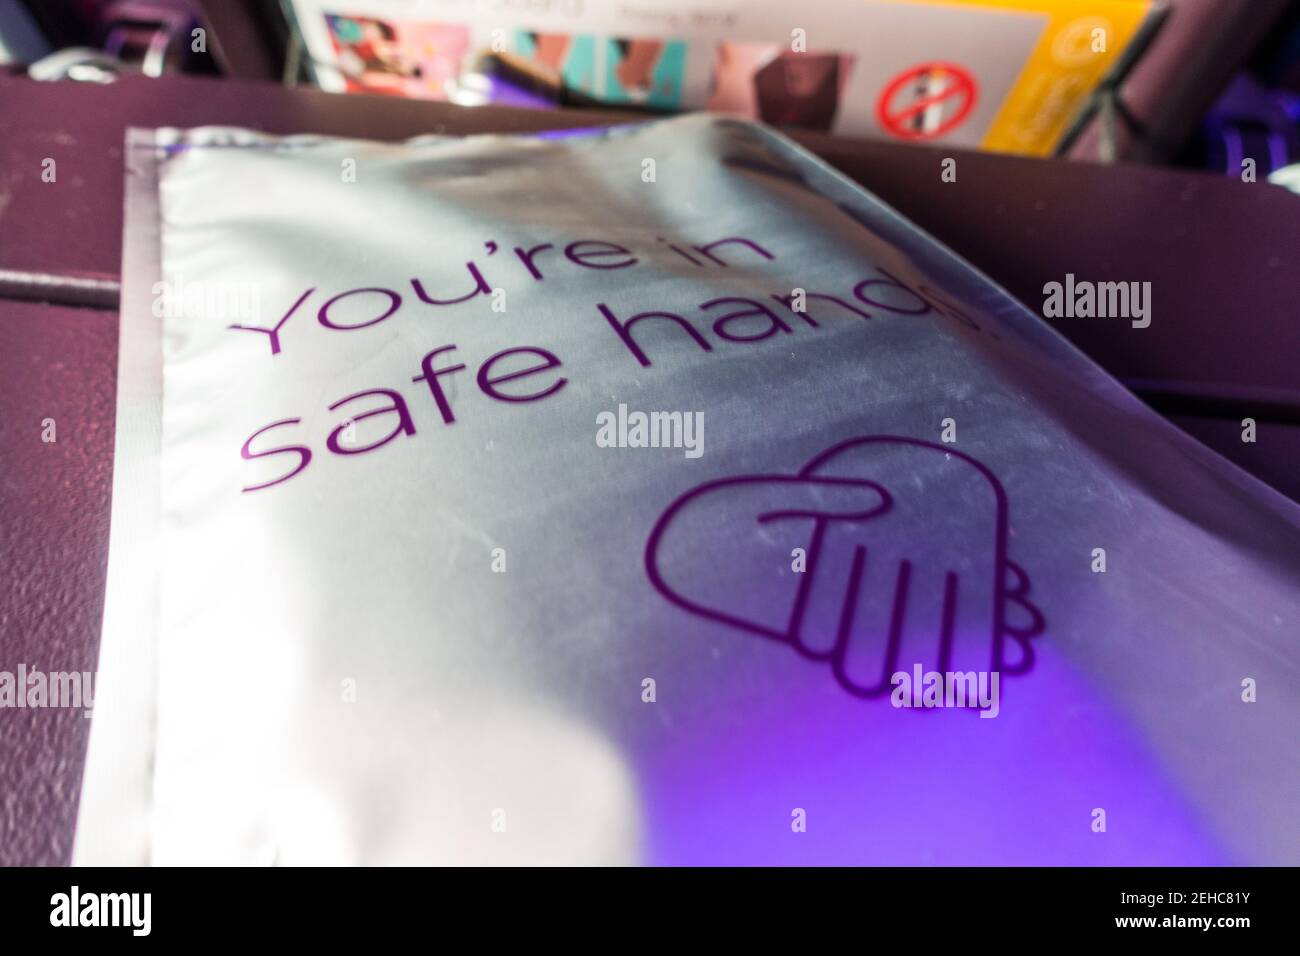 Safety precaution against coronavirus during air travel on Virgin Atlantic flight Stock Photo